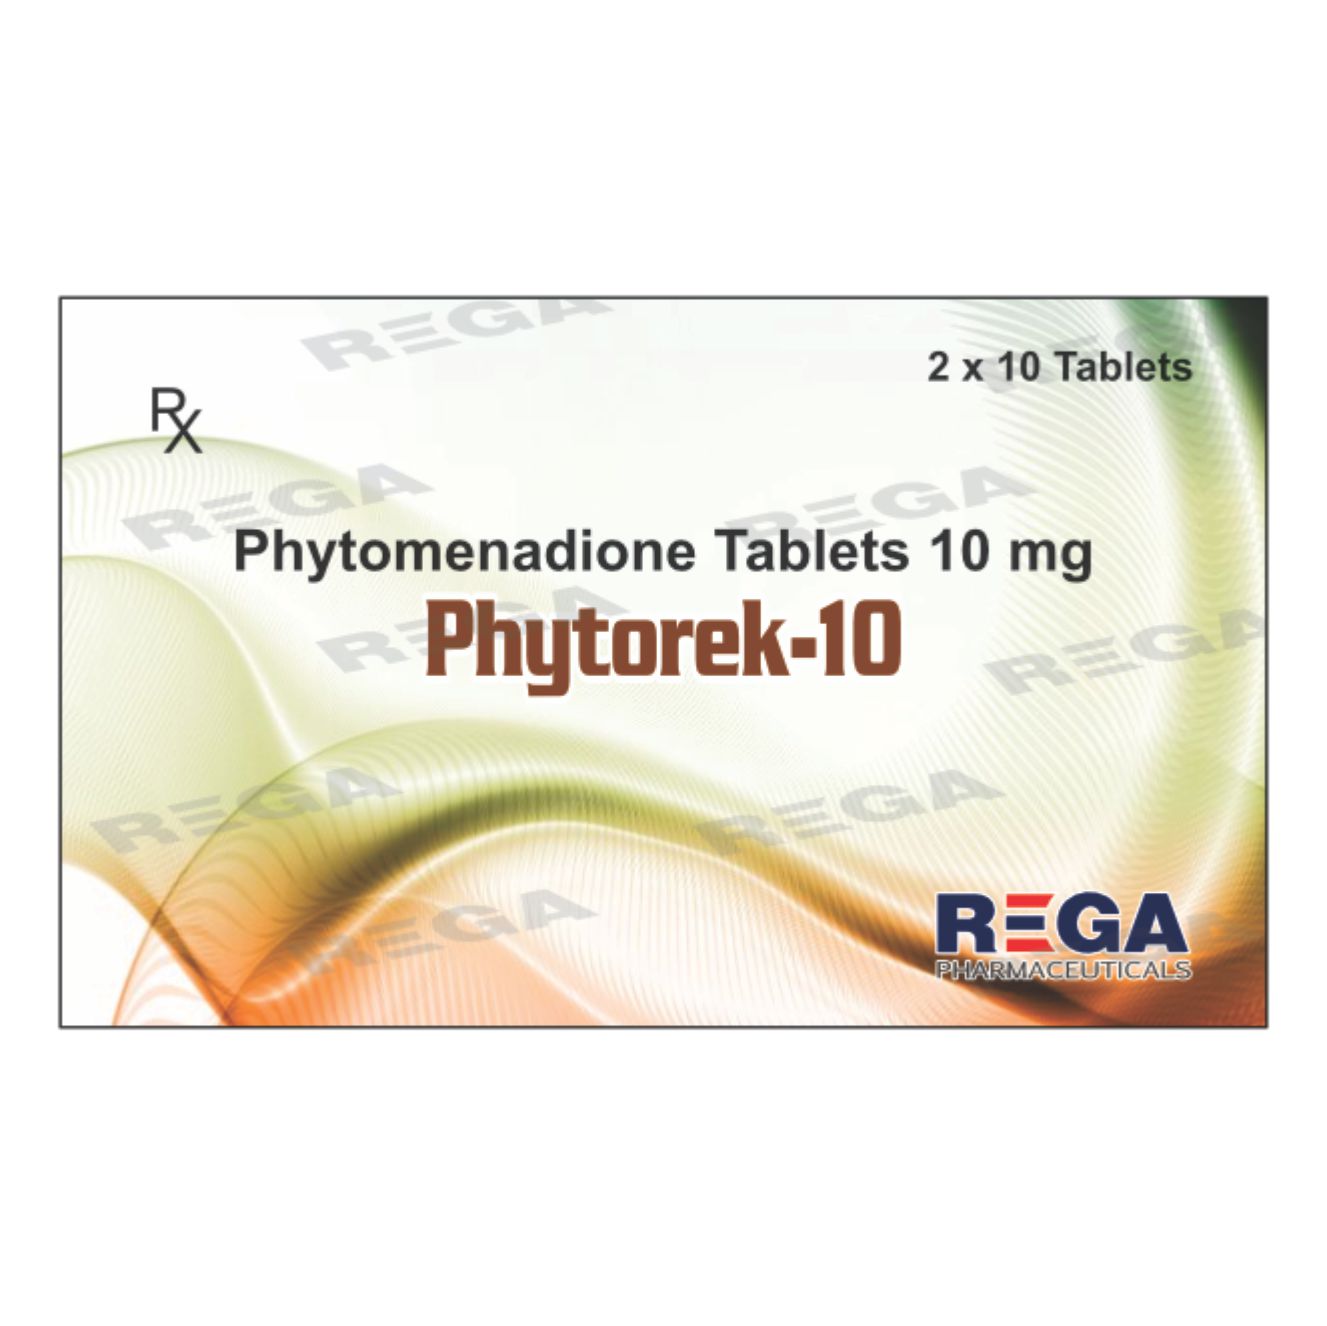 Phytomenadione Tablets 10 mg